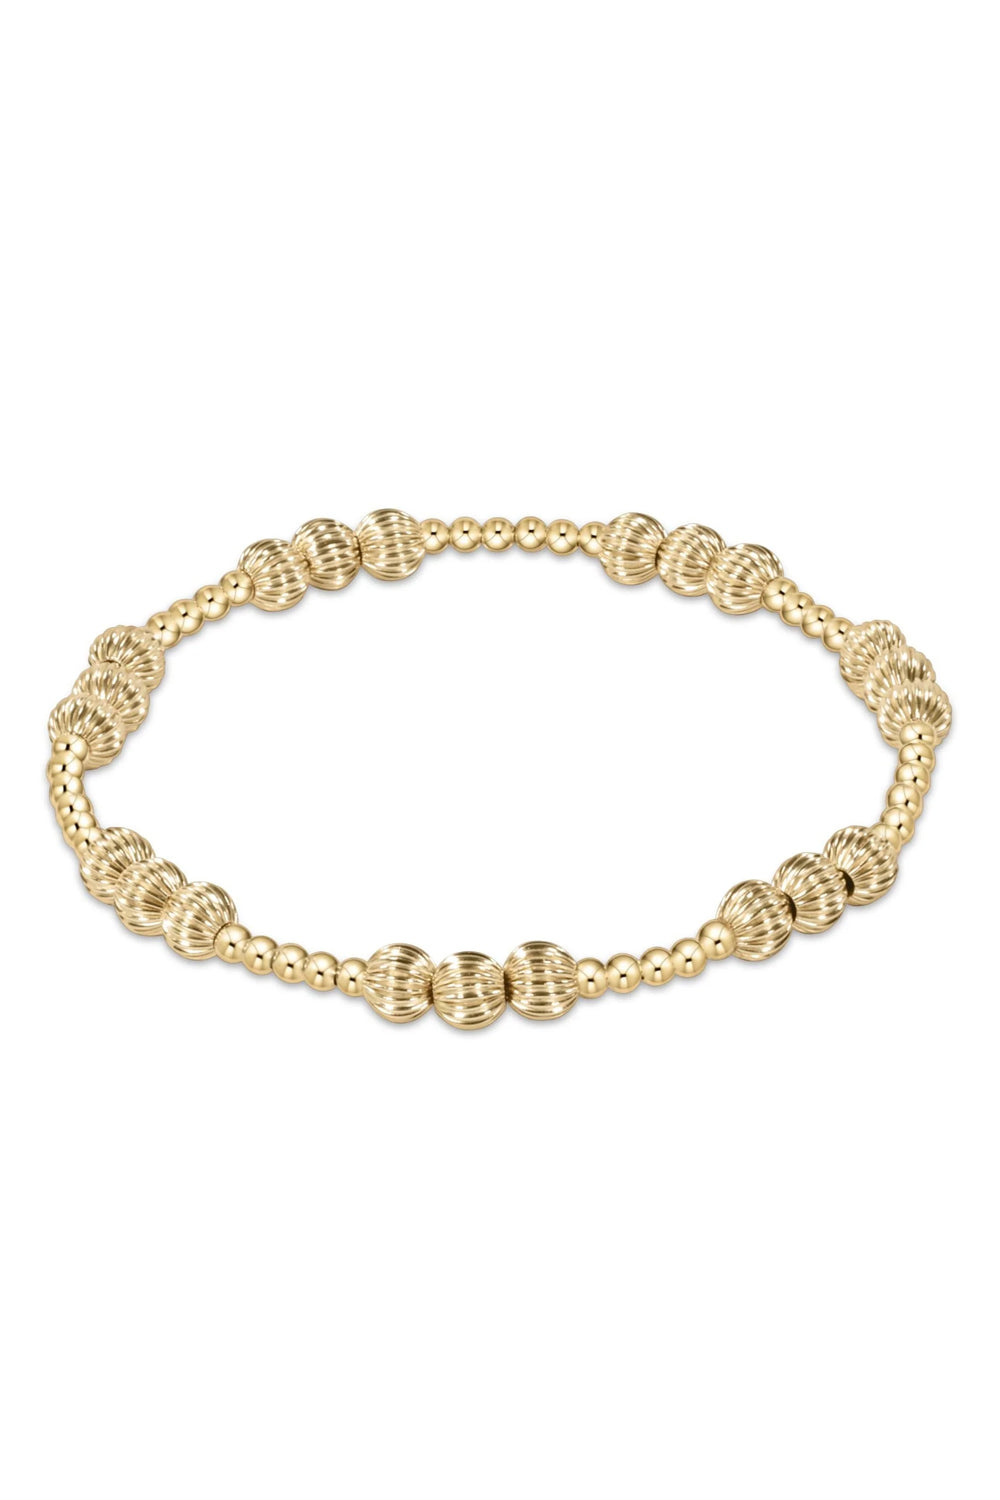 enewton: Dignity Joy Pattern 5mm Bead Bracelet - Gold | Makk Fashions